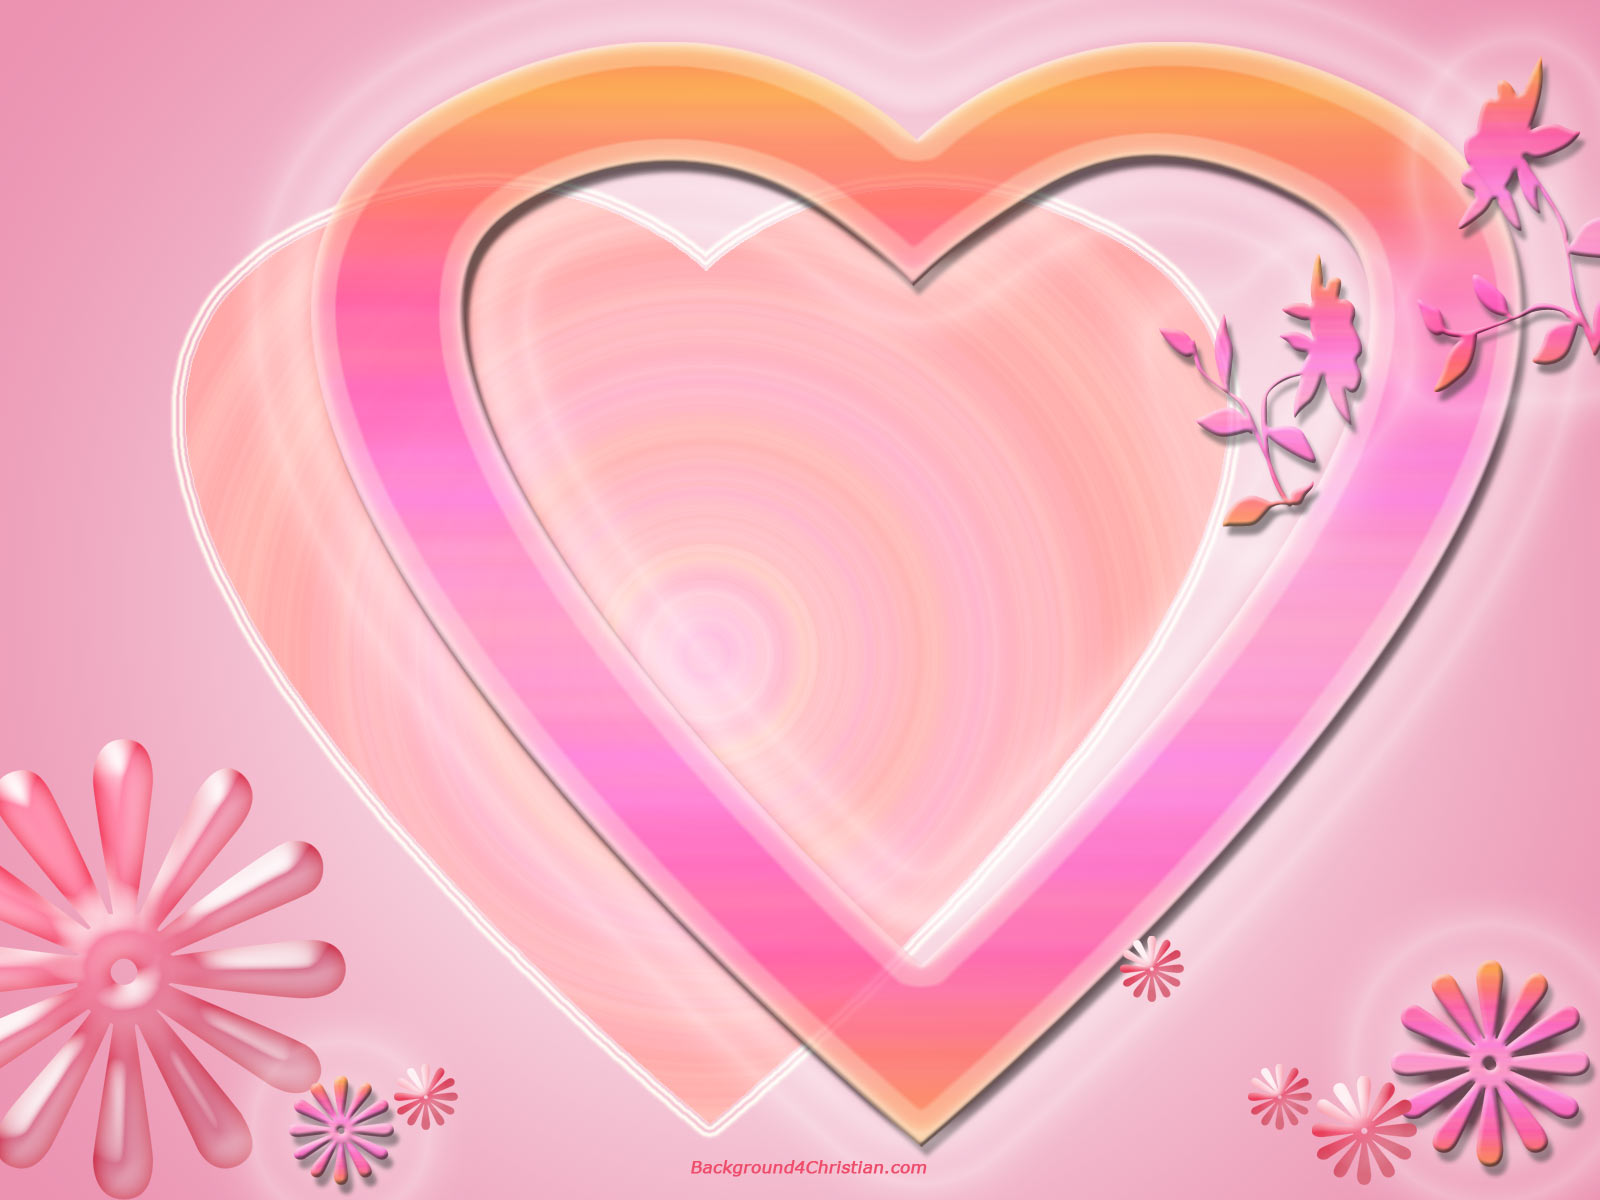 http://2.bp.blogspot.com/_HUYqVp13qlI/TPnVHO_ziYI/AAAAAAAAACo/Jn4Eeoq05AI/s1600/pink-valentine-heart1.jpg